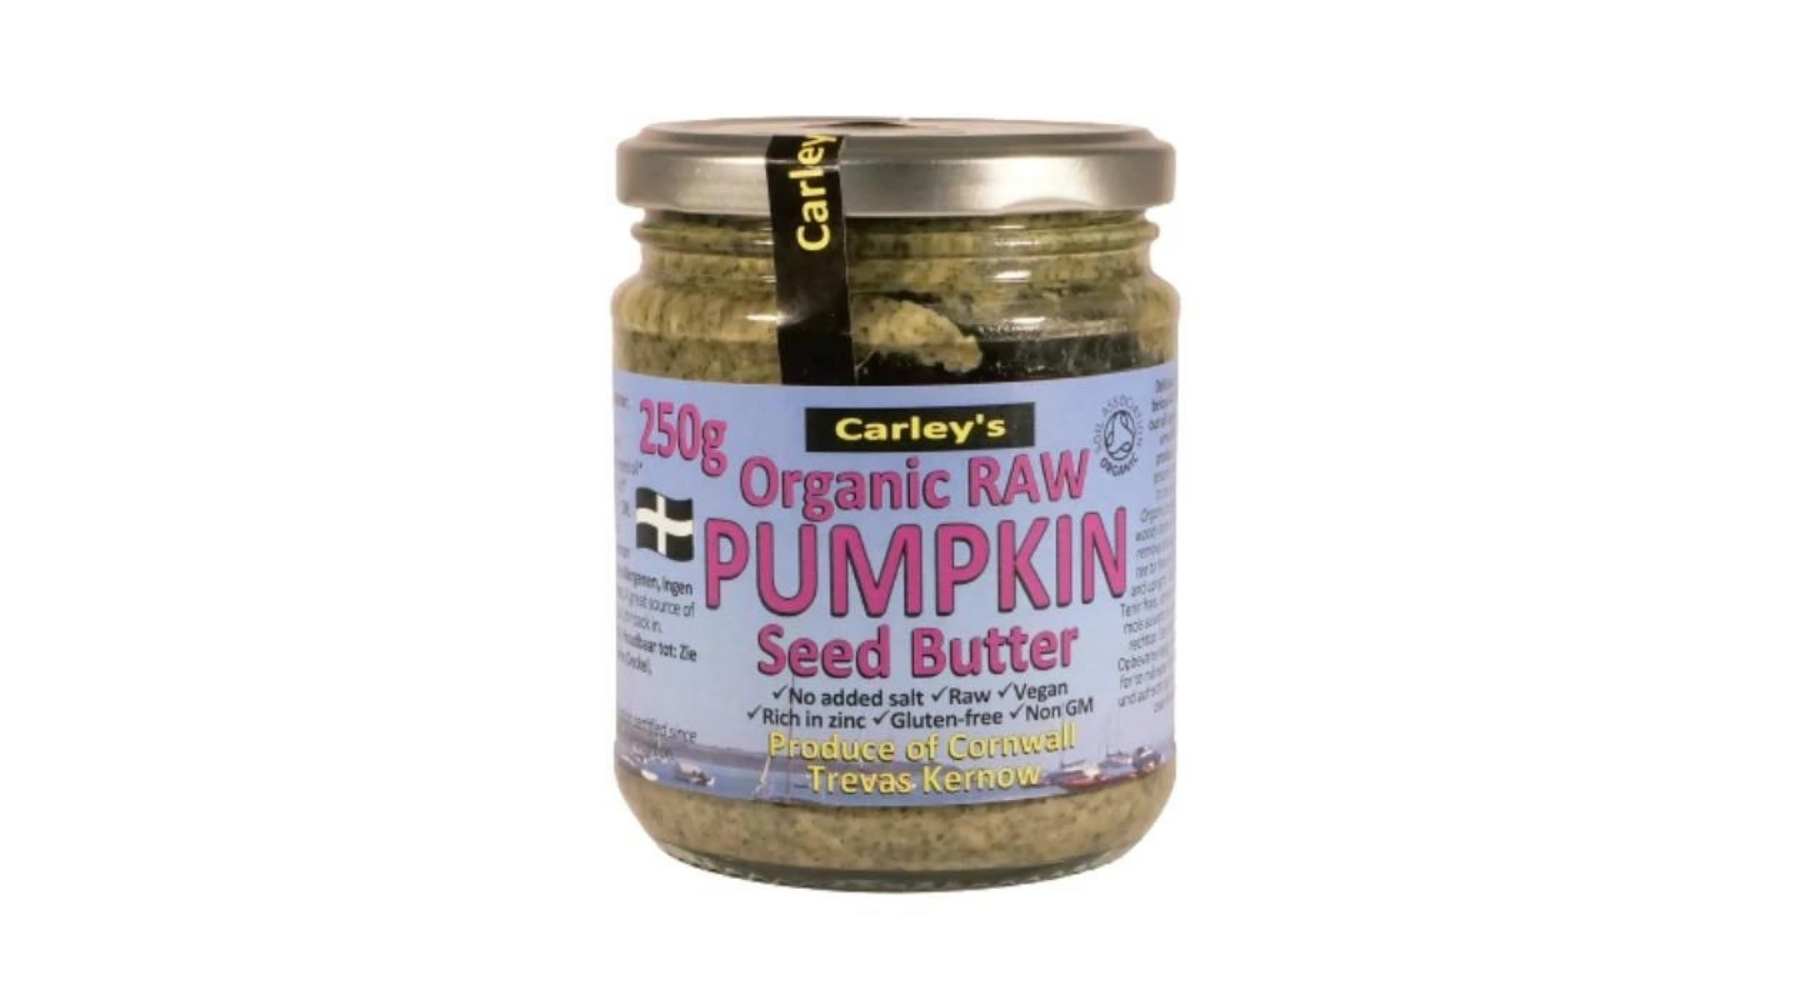 Carley's - Organic Pumpkin Seed Butter (Raw & Roasted), 250g